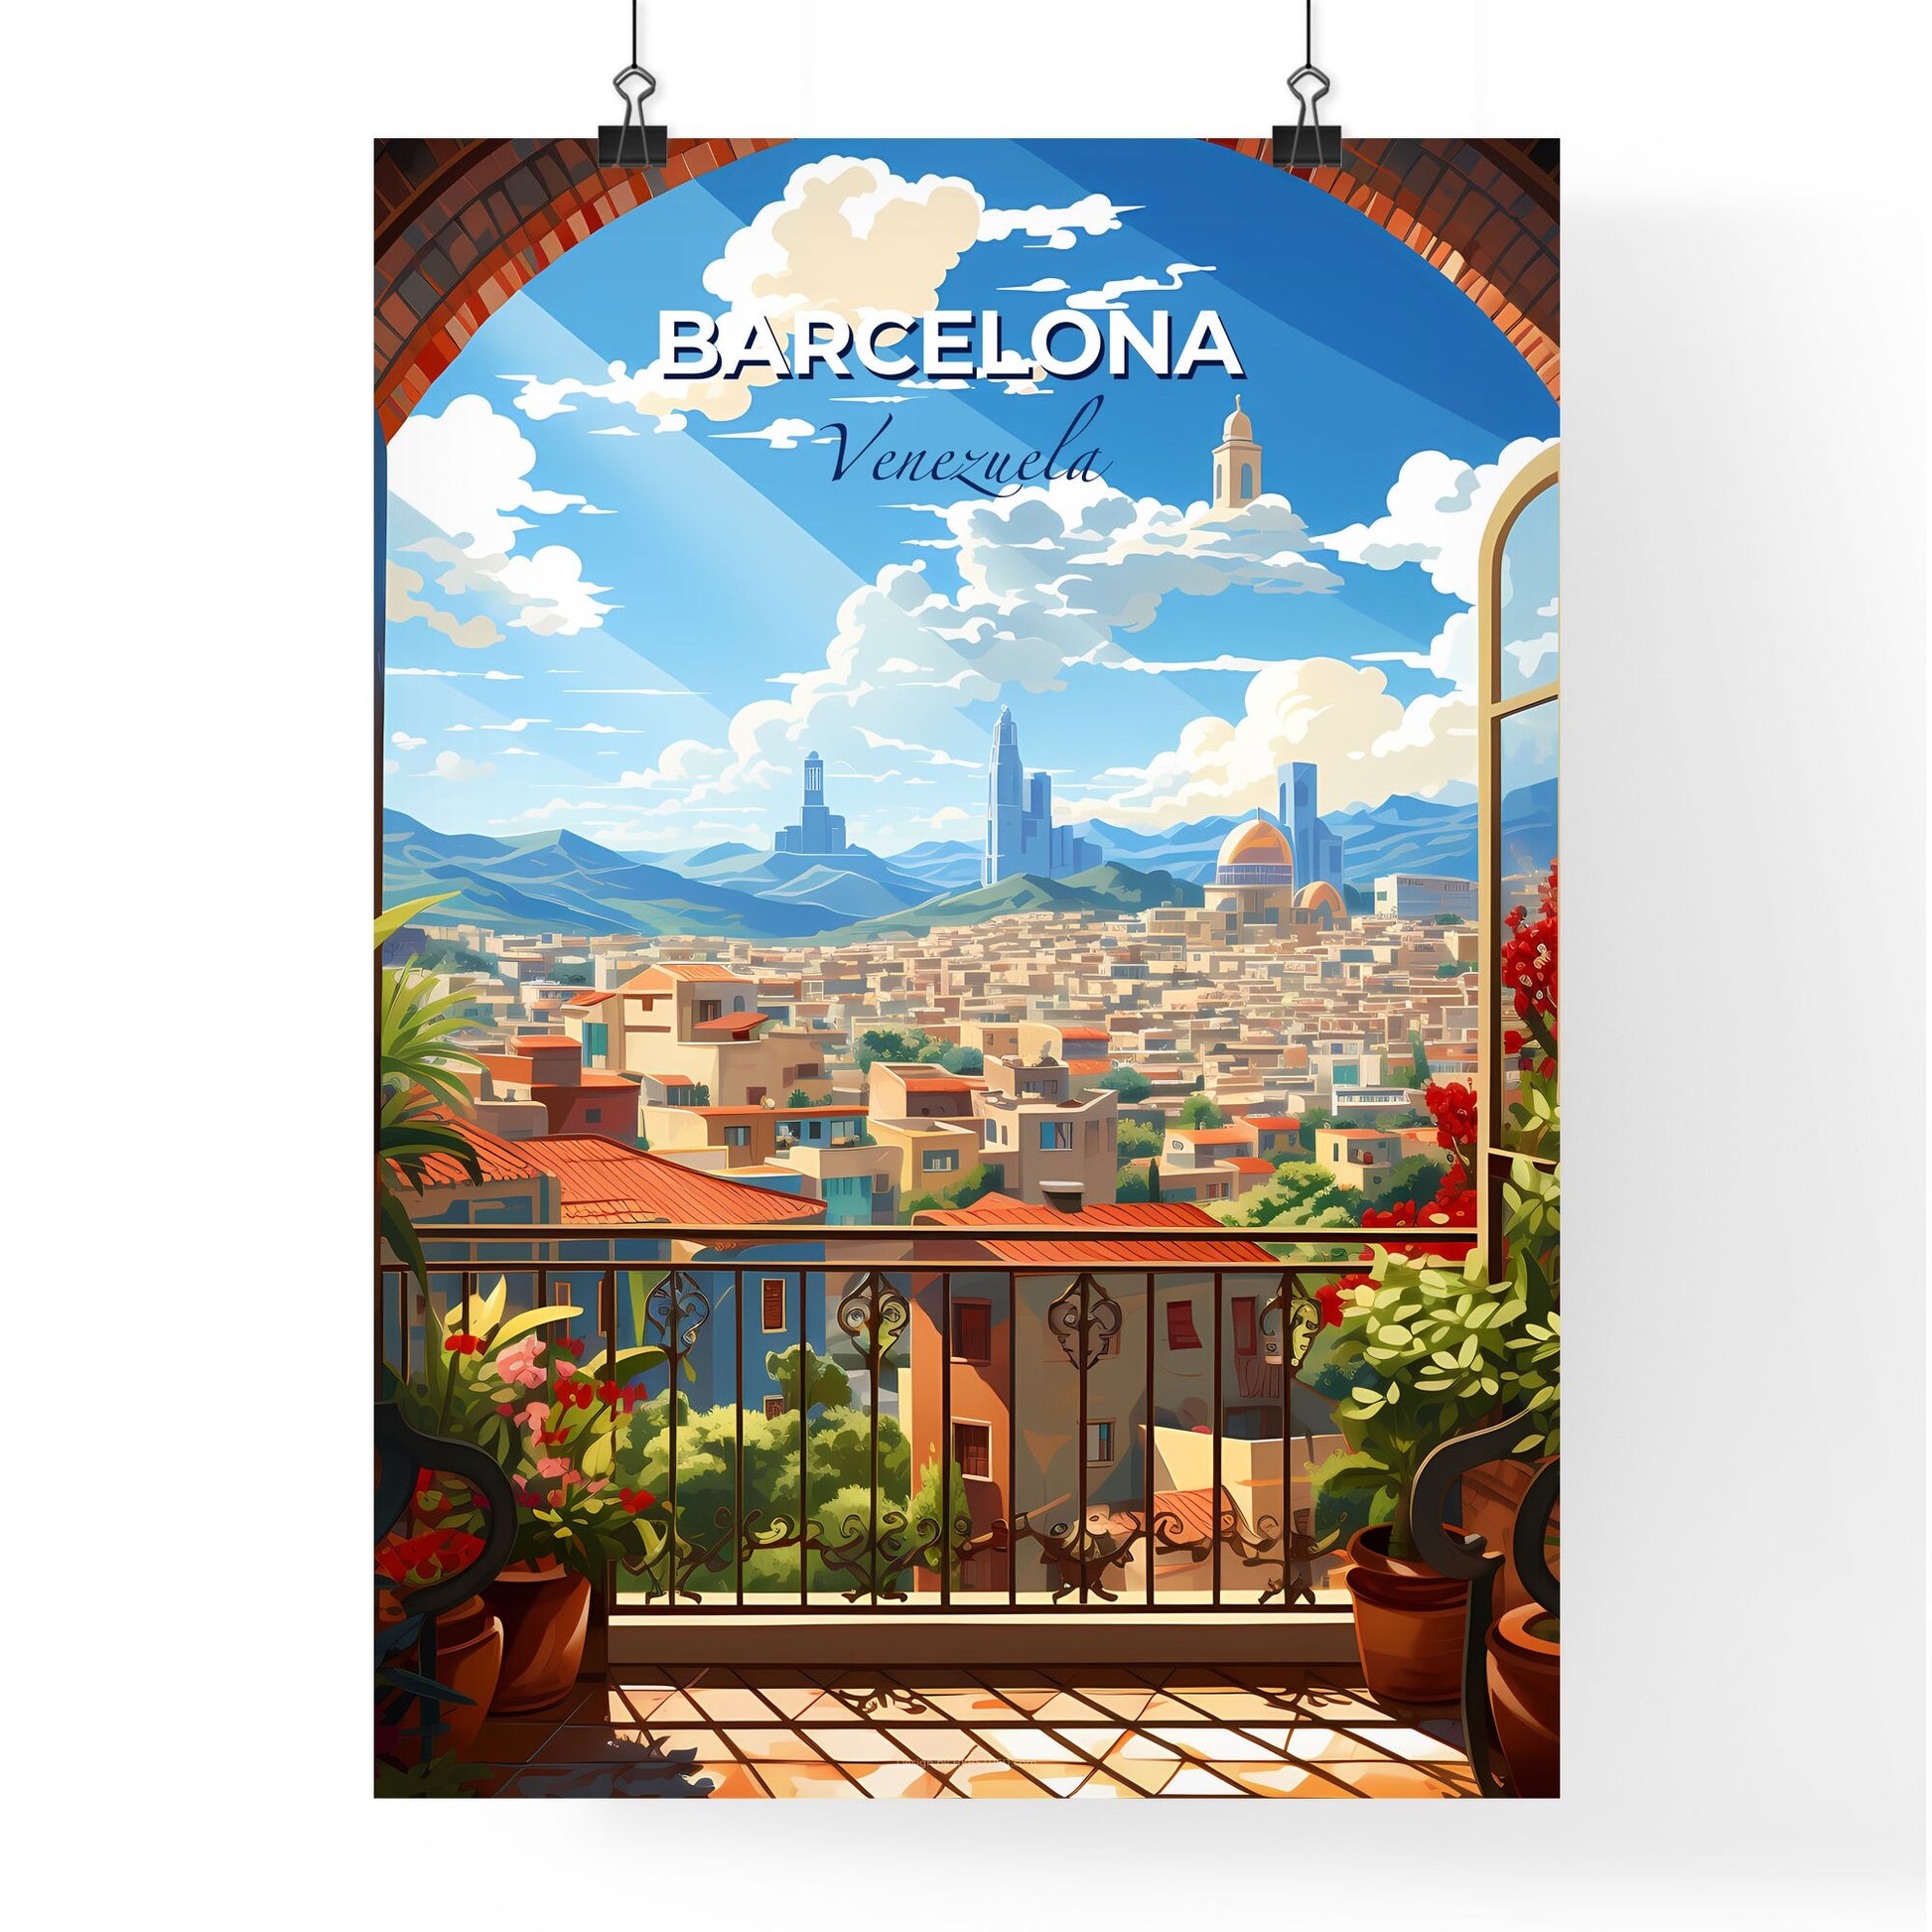 Vibrant Art Deco Cityscape Canvas - Barcelona Venezuela Skyline from a Balcony Perspective Default Title